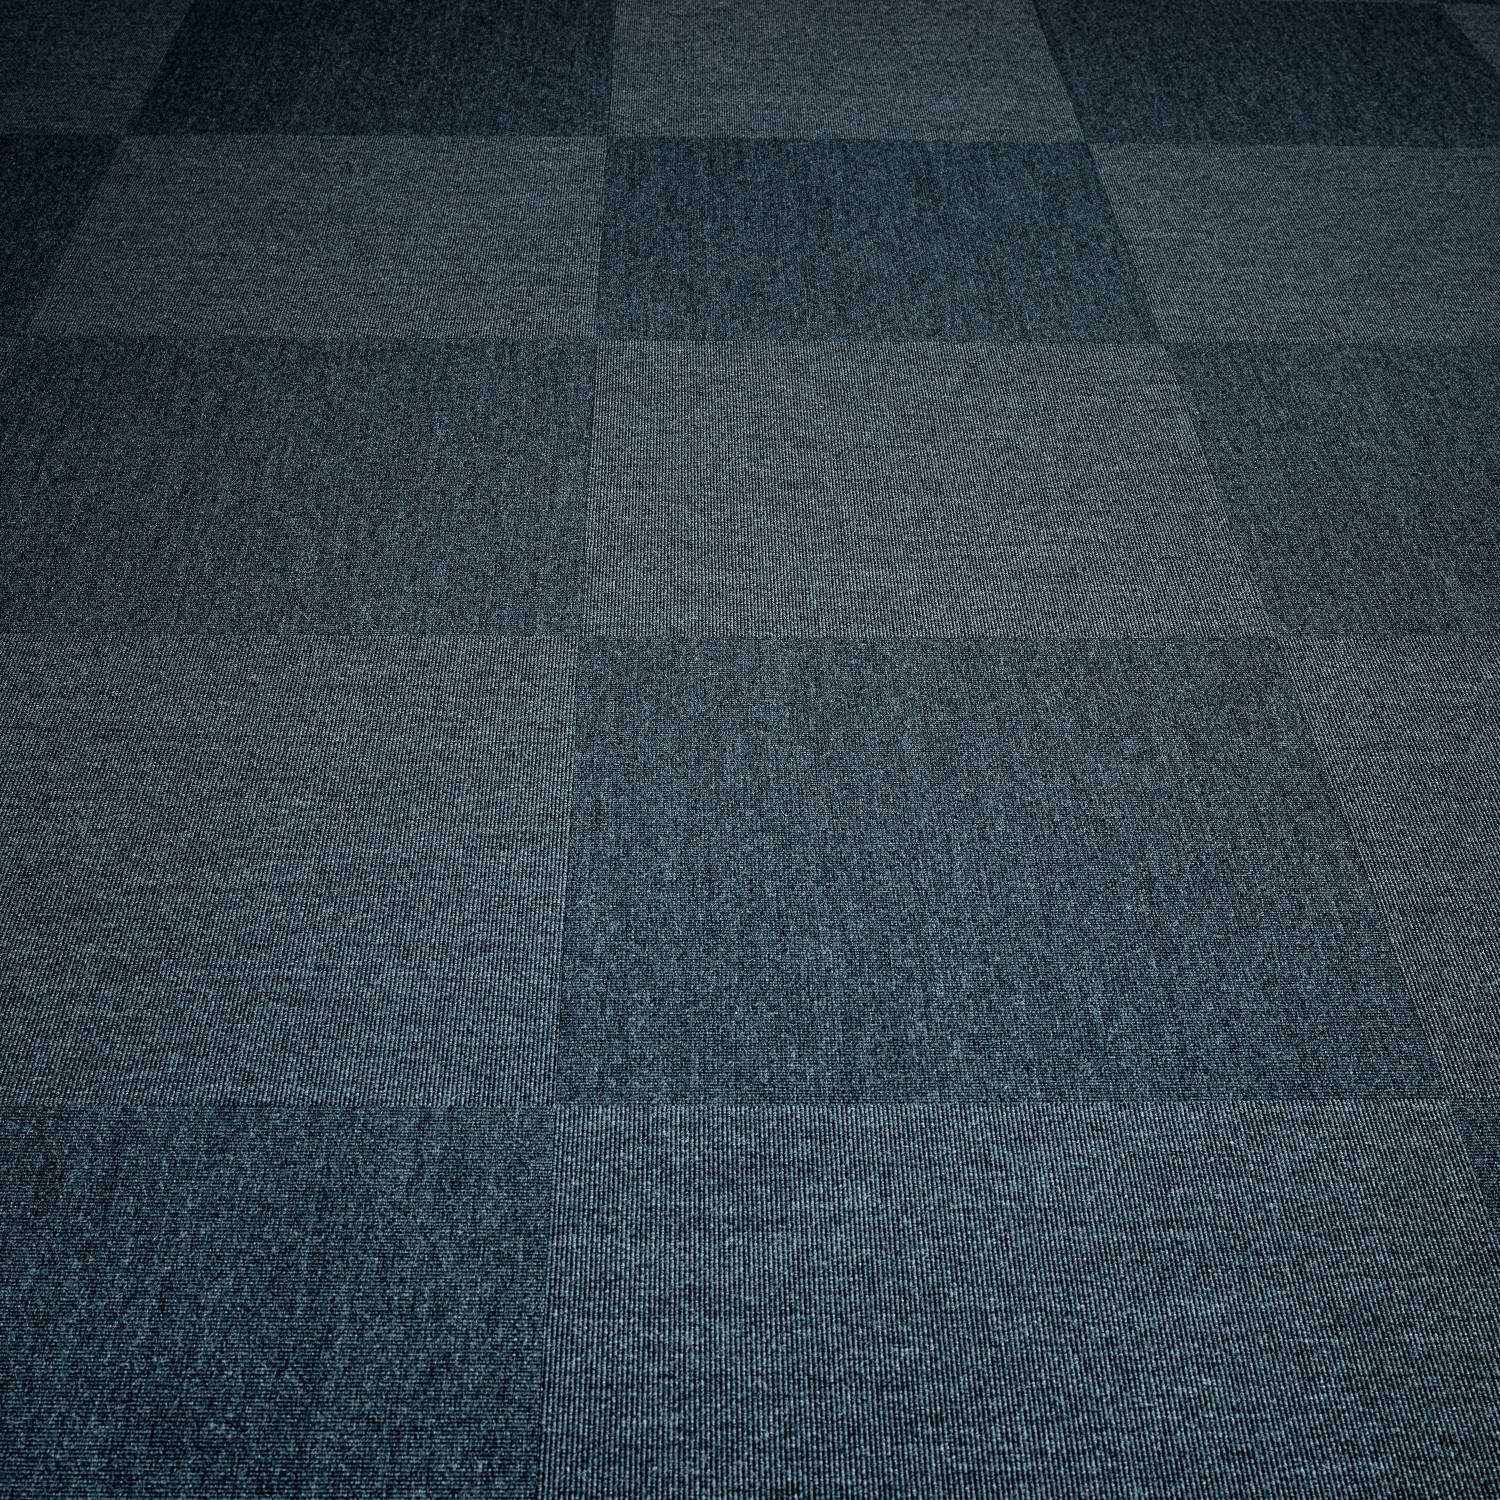 Eco Profile carpet tiles